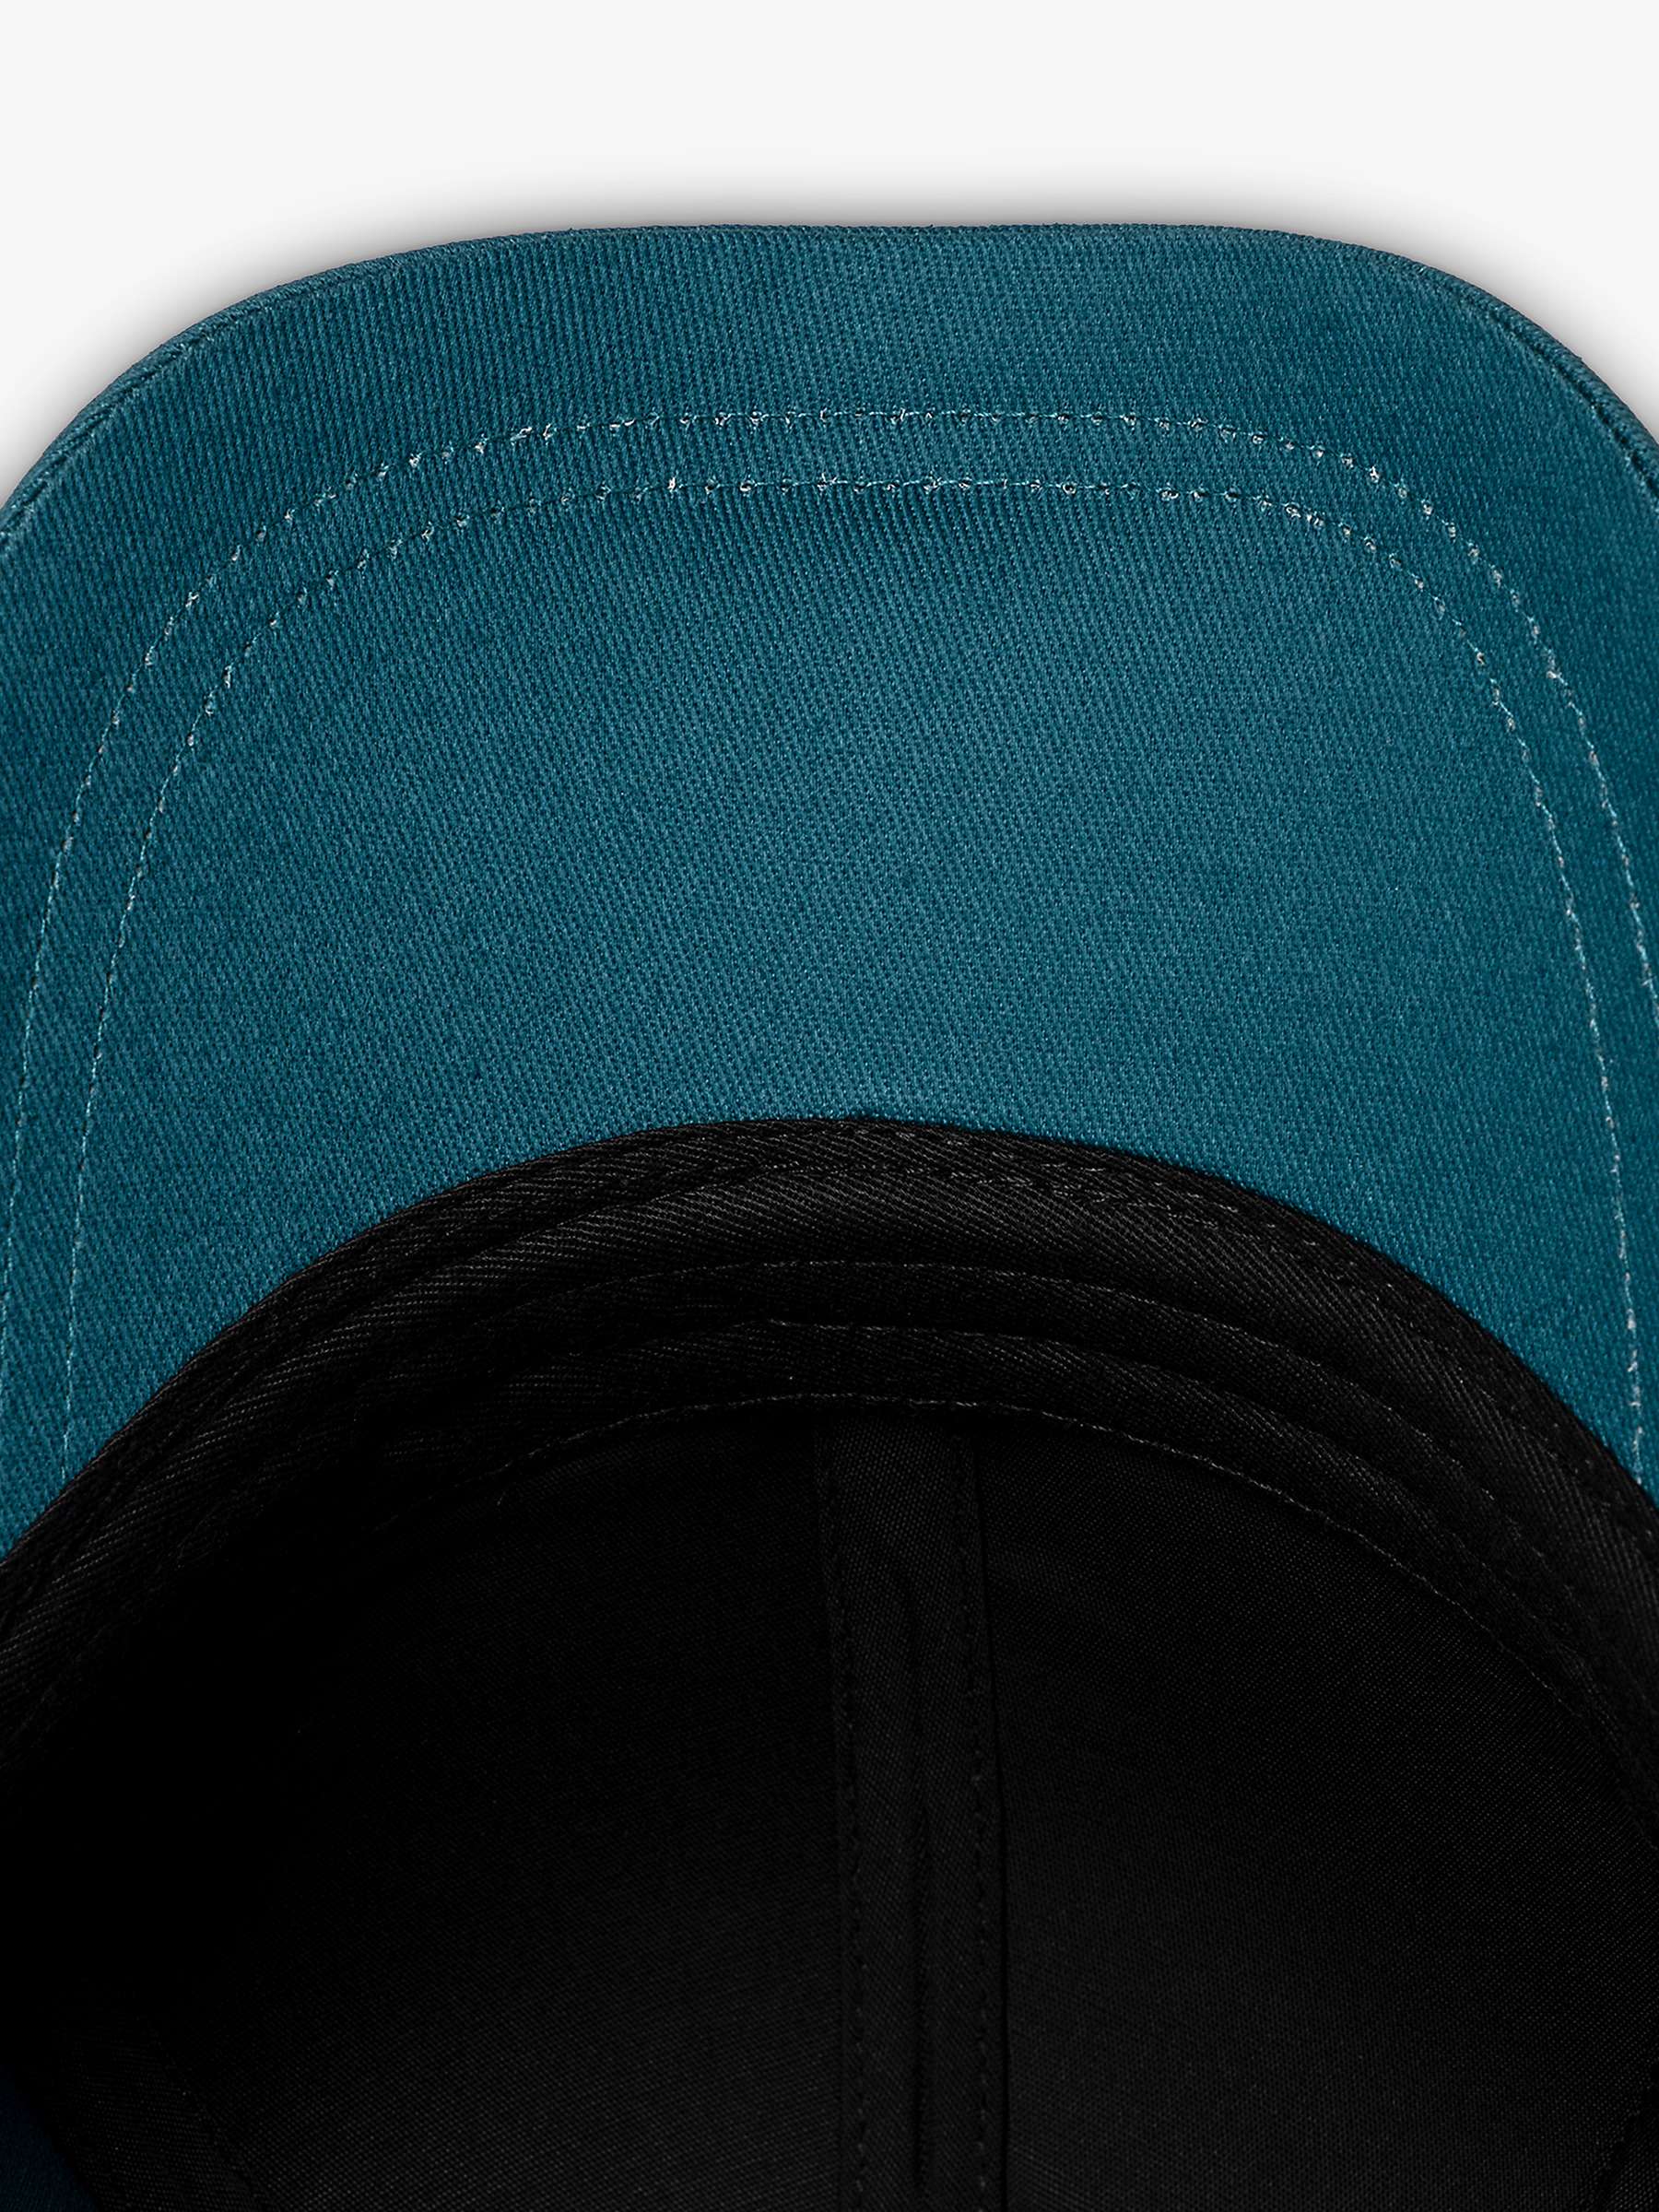 Buy Paul Smith Zebra Baseball Cap, One Size Online at johnlewis.com